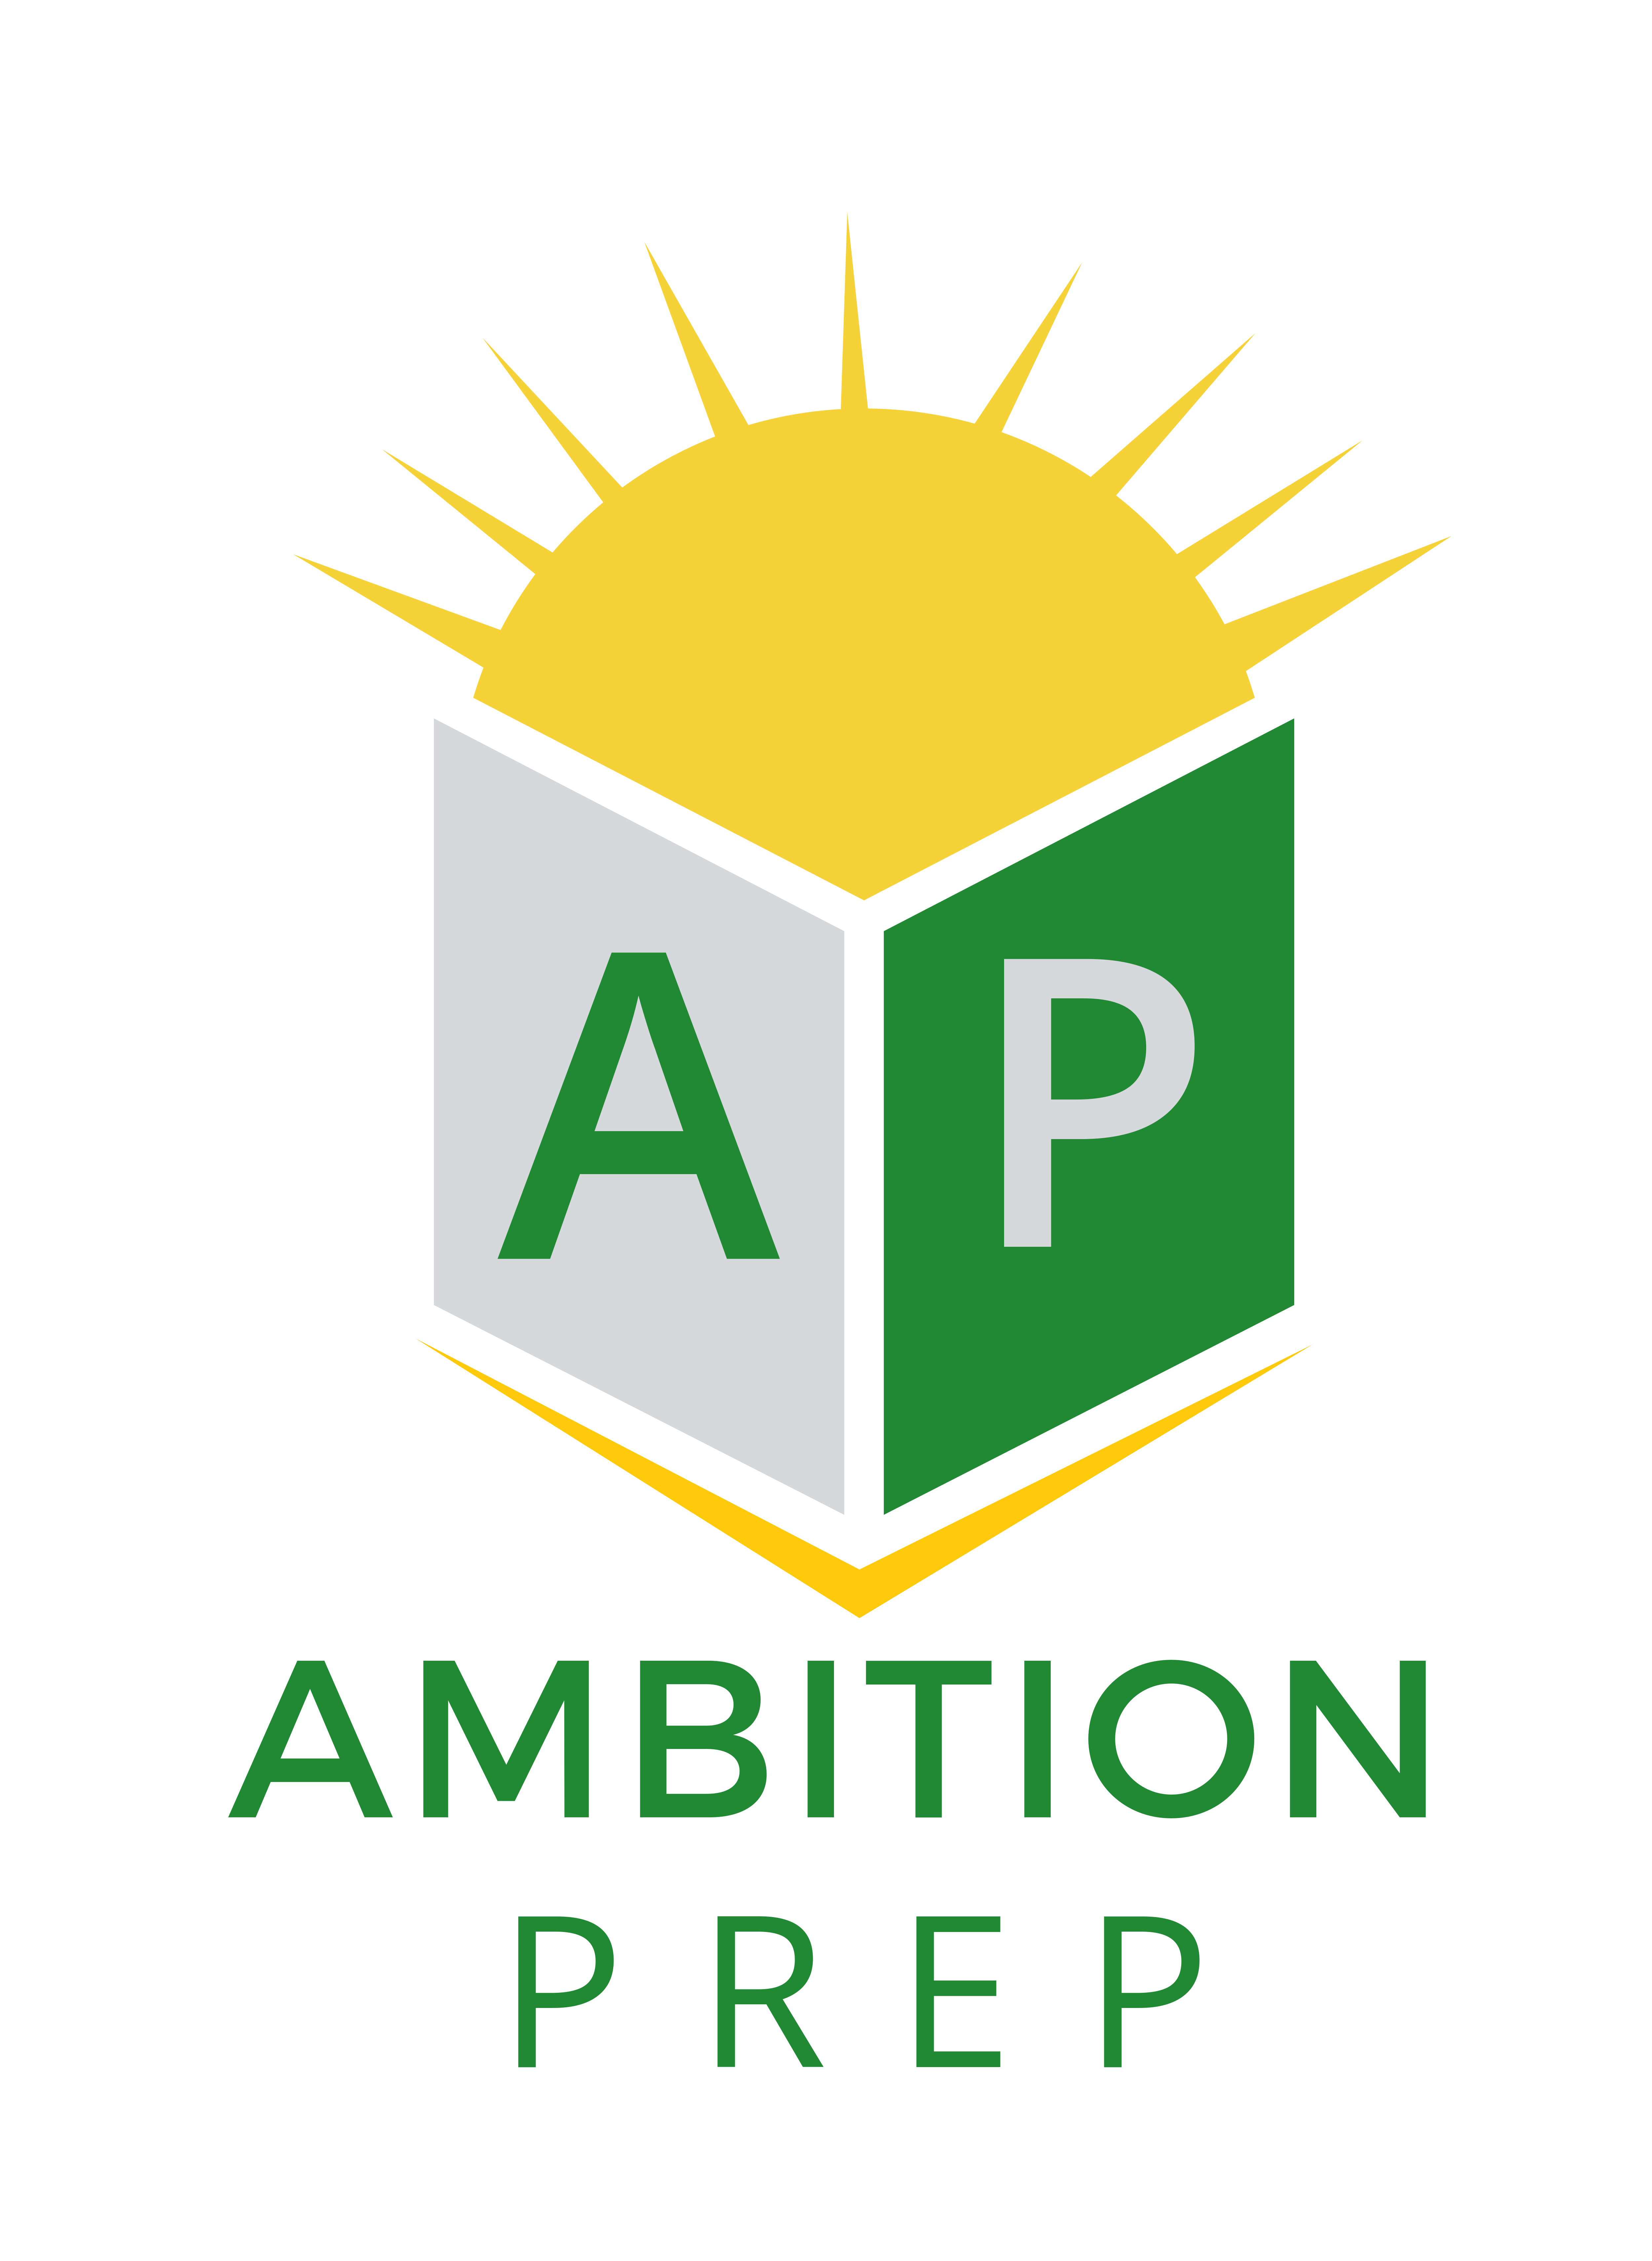 Ambition Preparatory Charter School logo